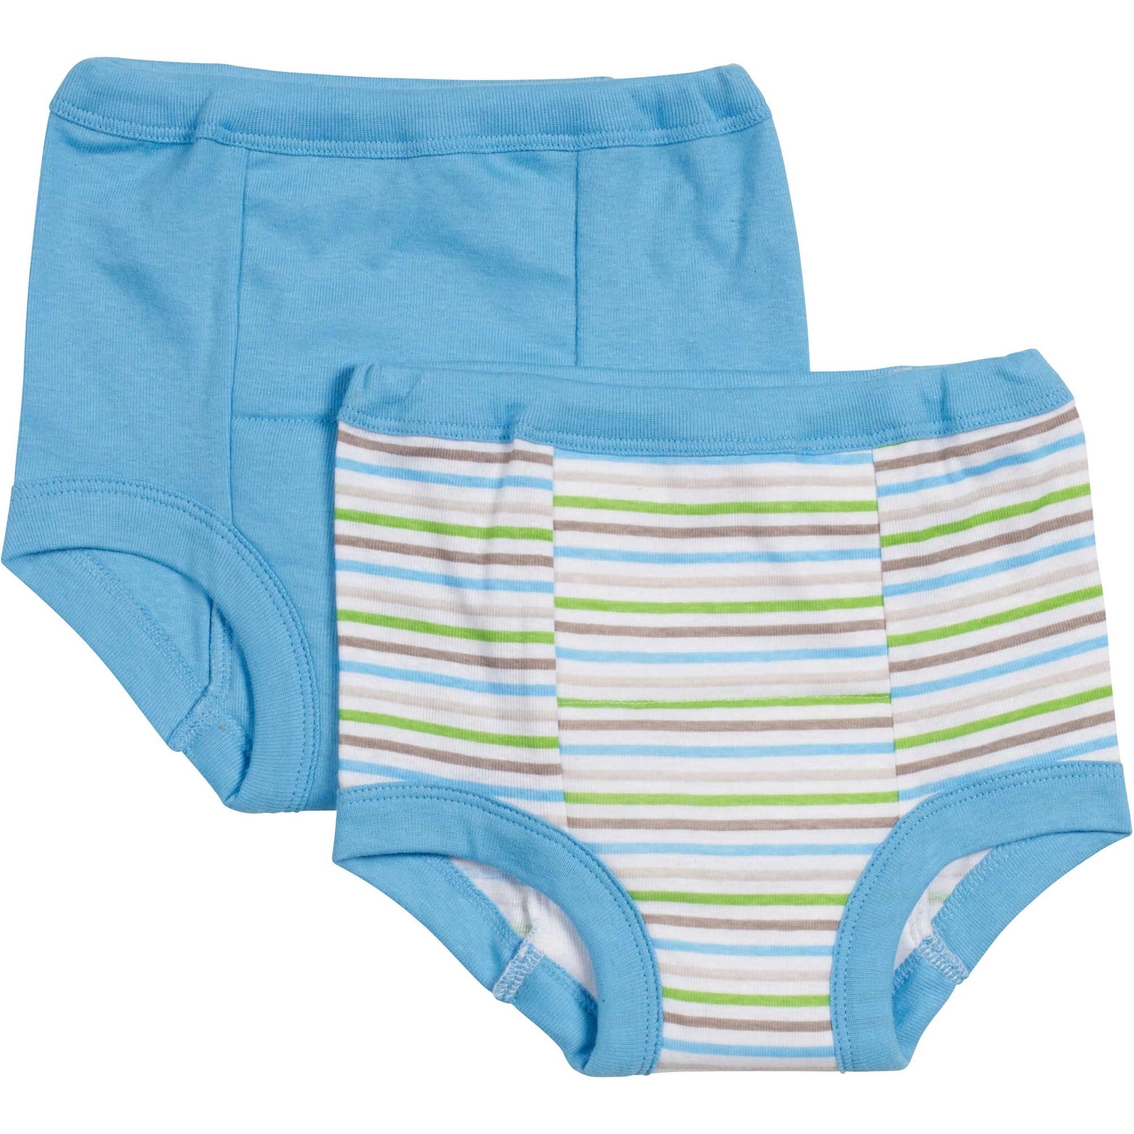 Gerber Infant And Toddler Boys Training Pants 2 Pk.